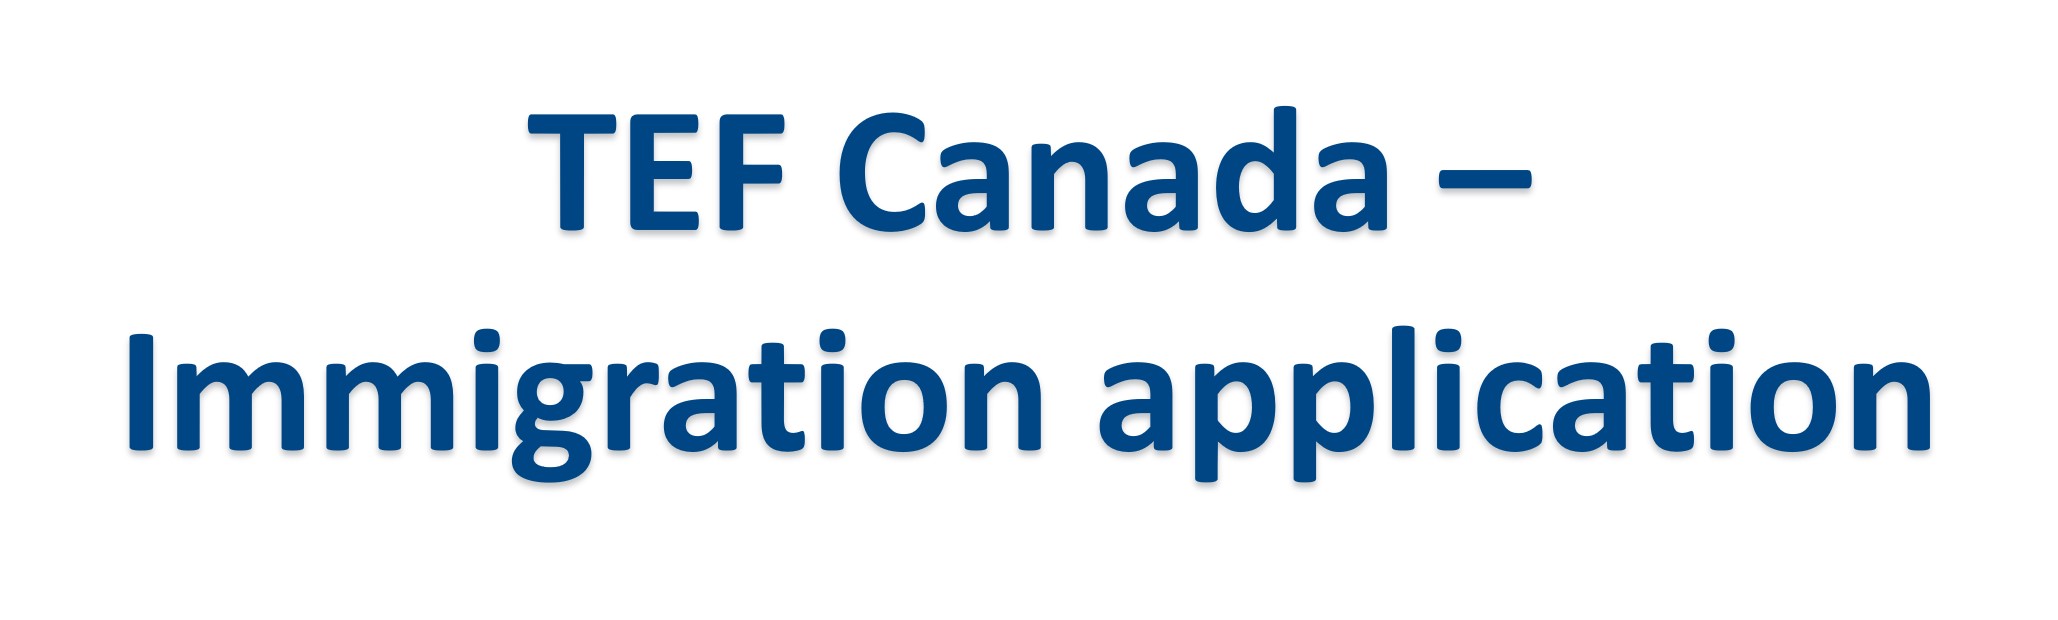 TEF Canada - Immigration application